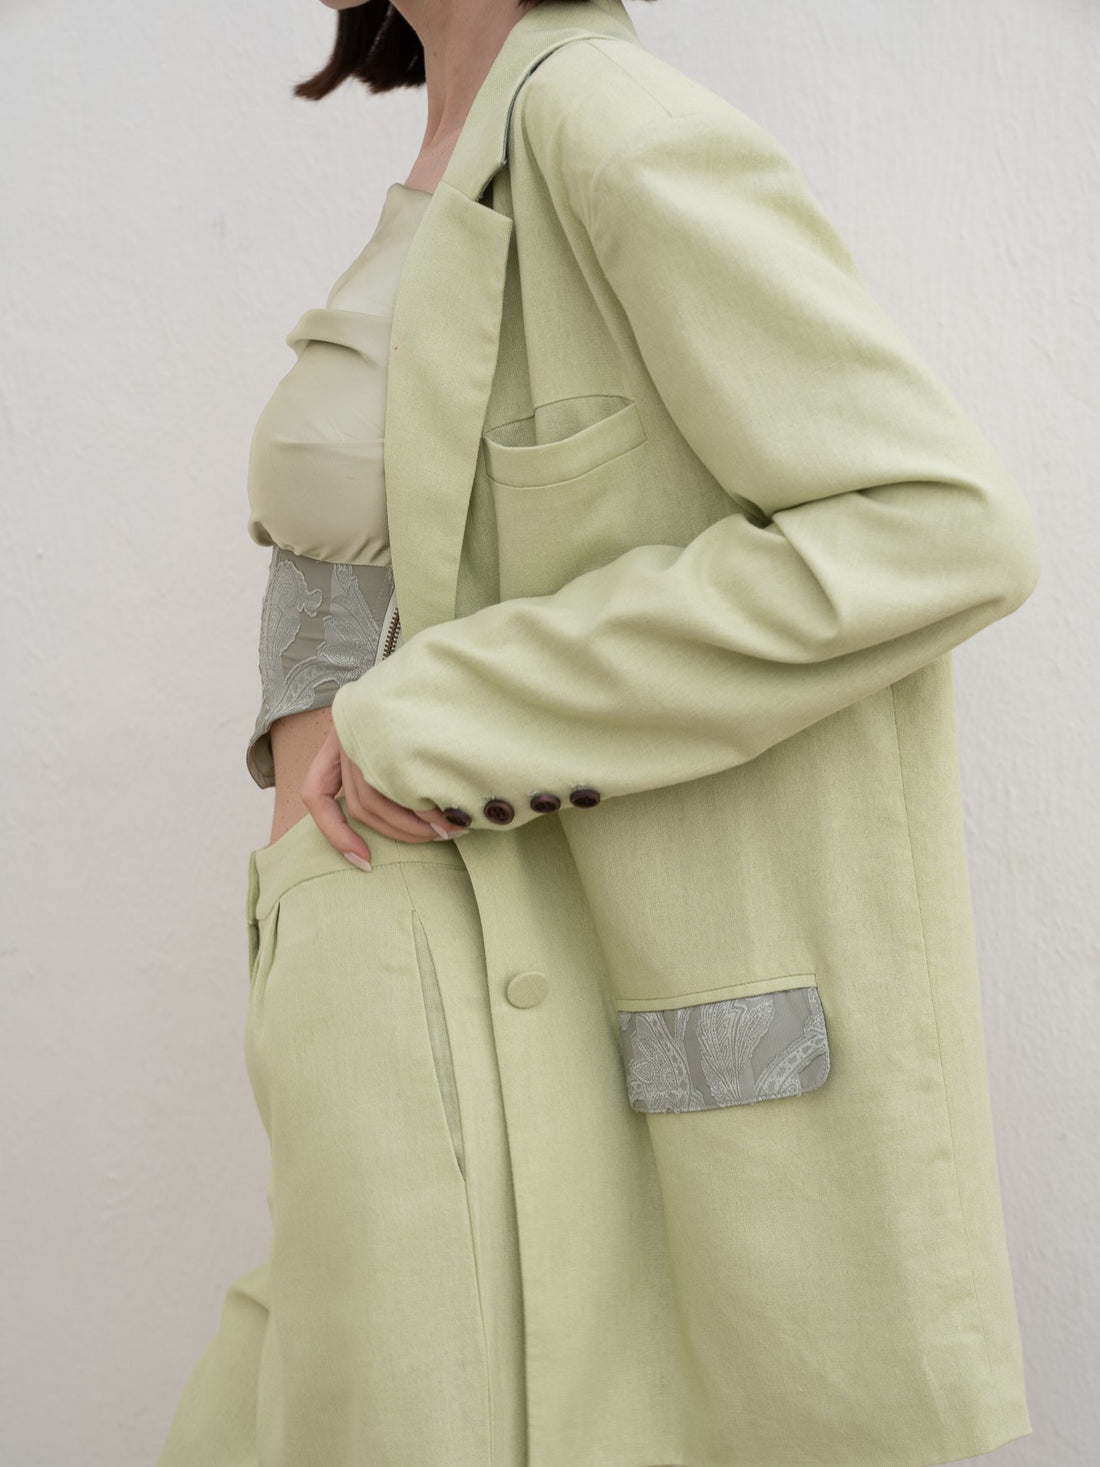 oriental linen jacket / 若葉(light green)